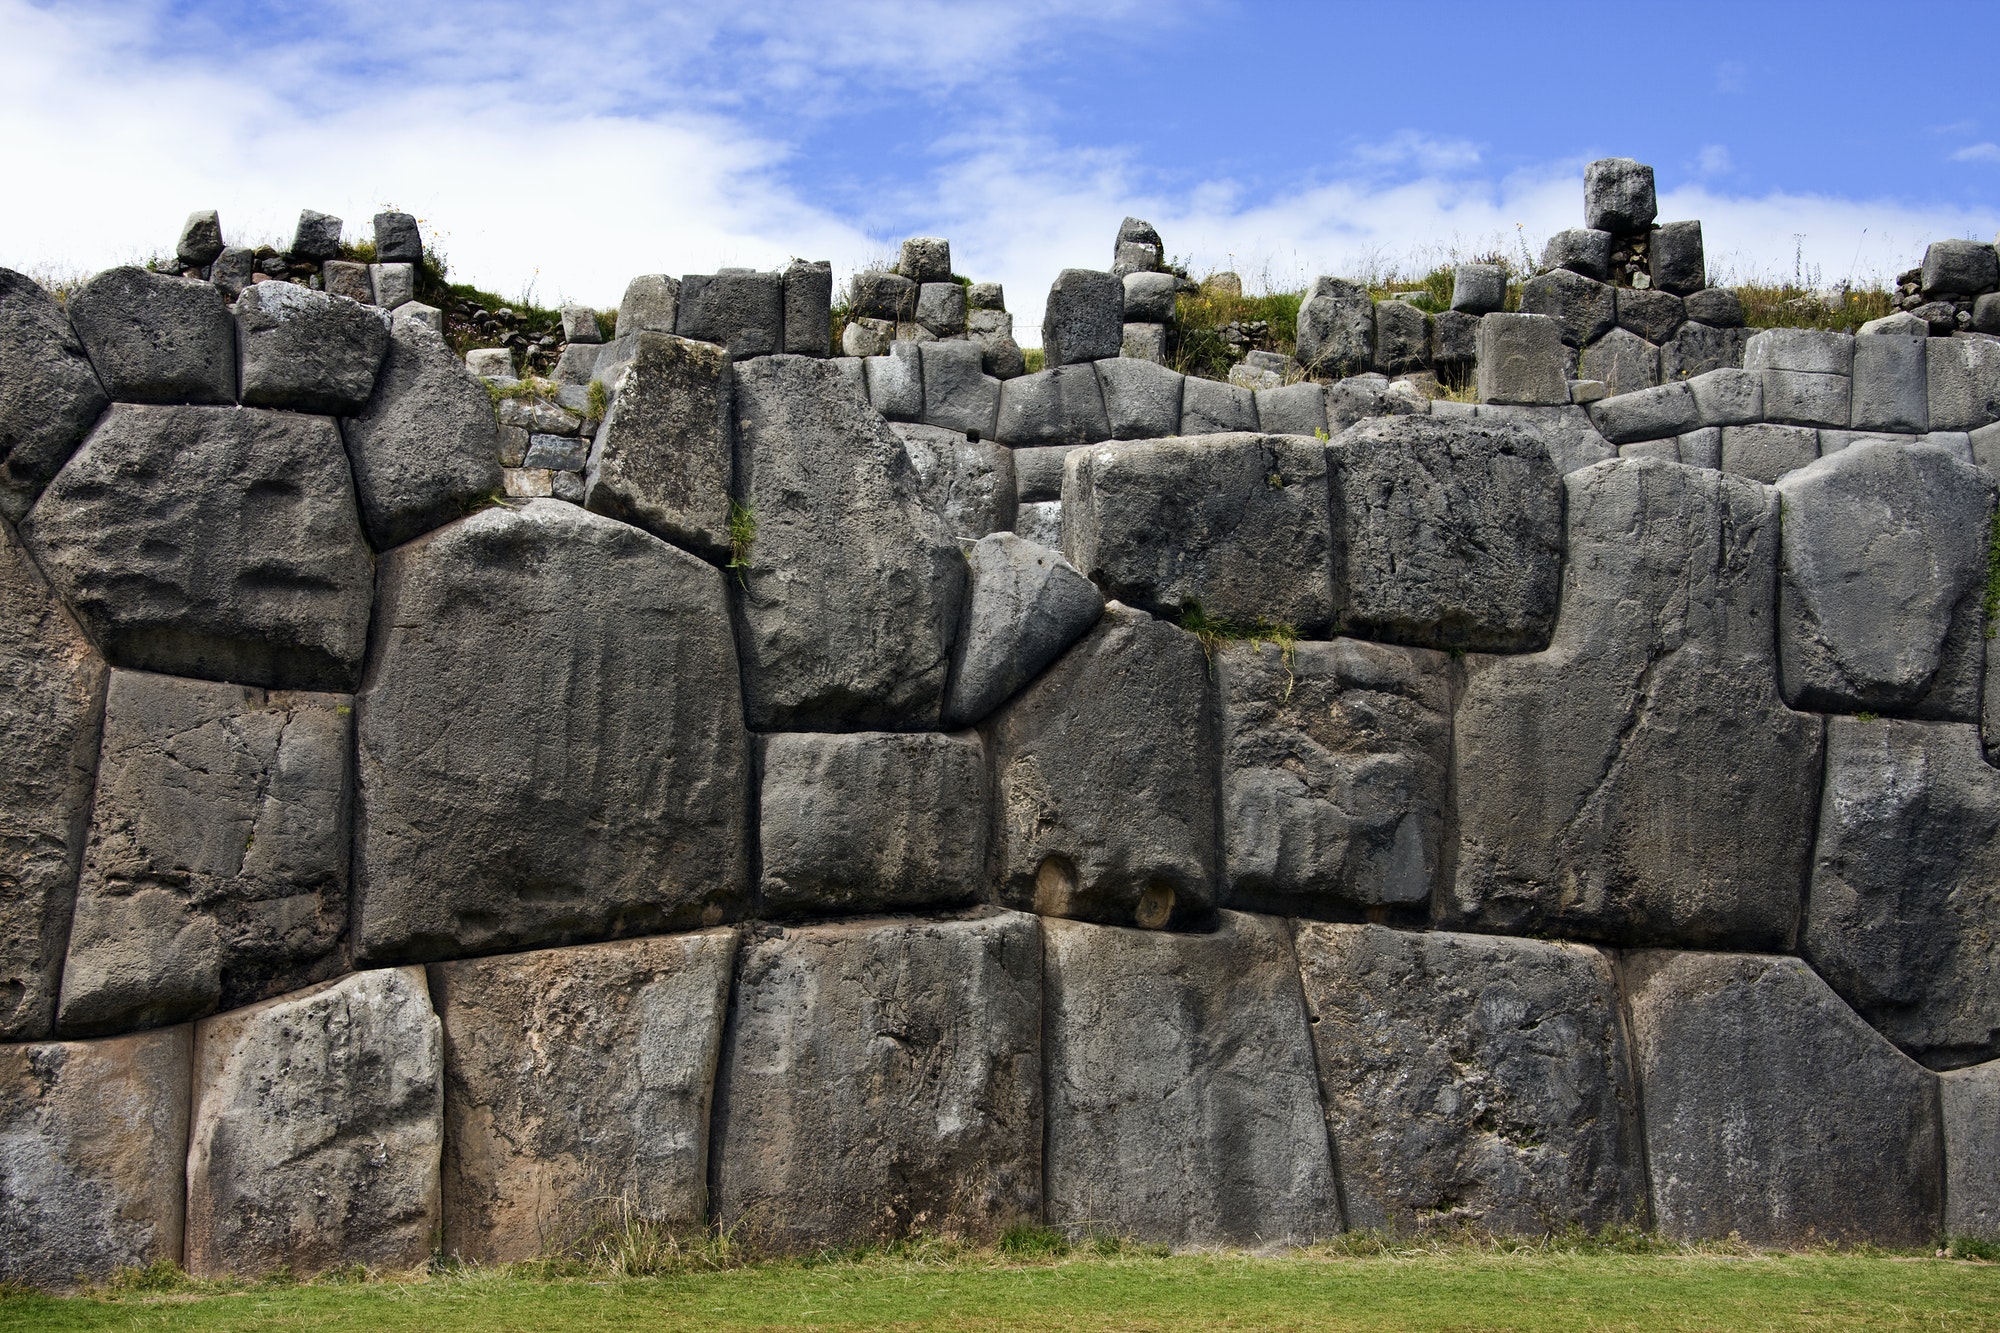 Inca stonework at Sacsayhuaman near Cuzco in Peru, South America.